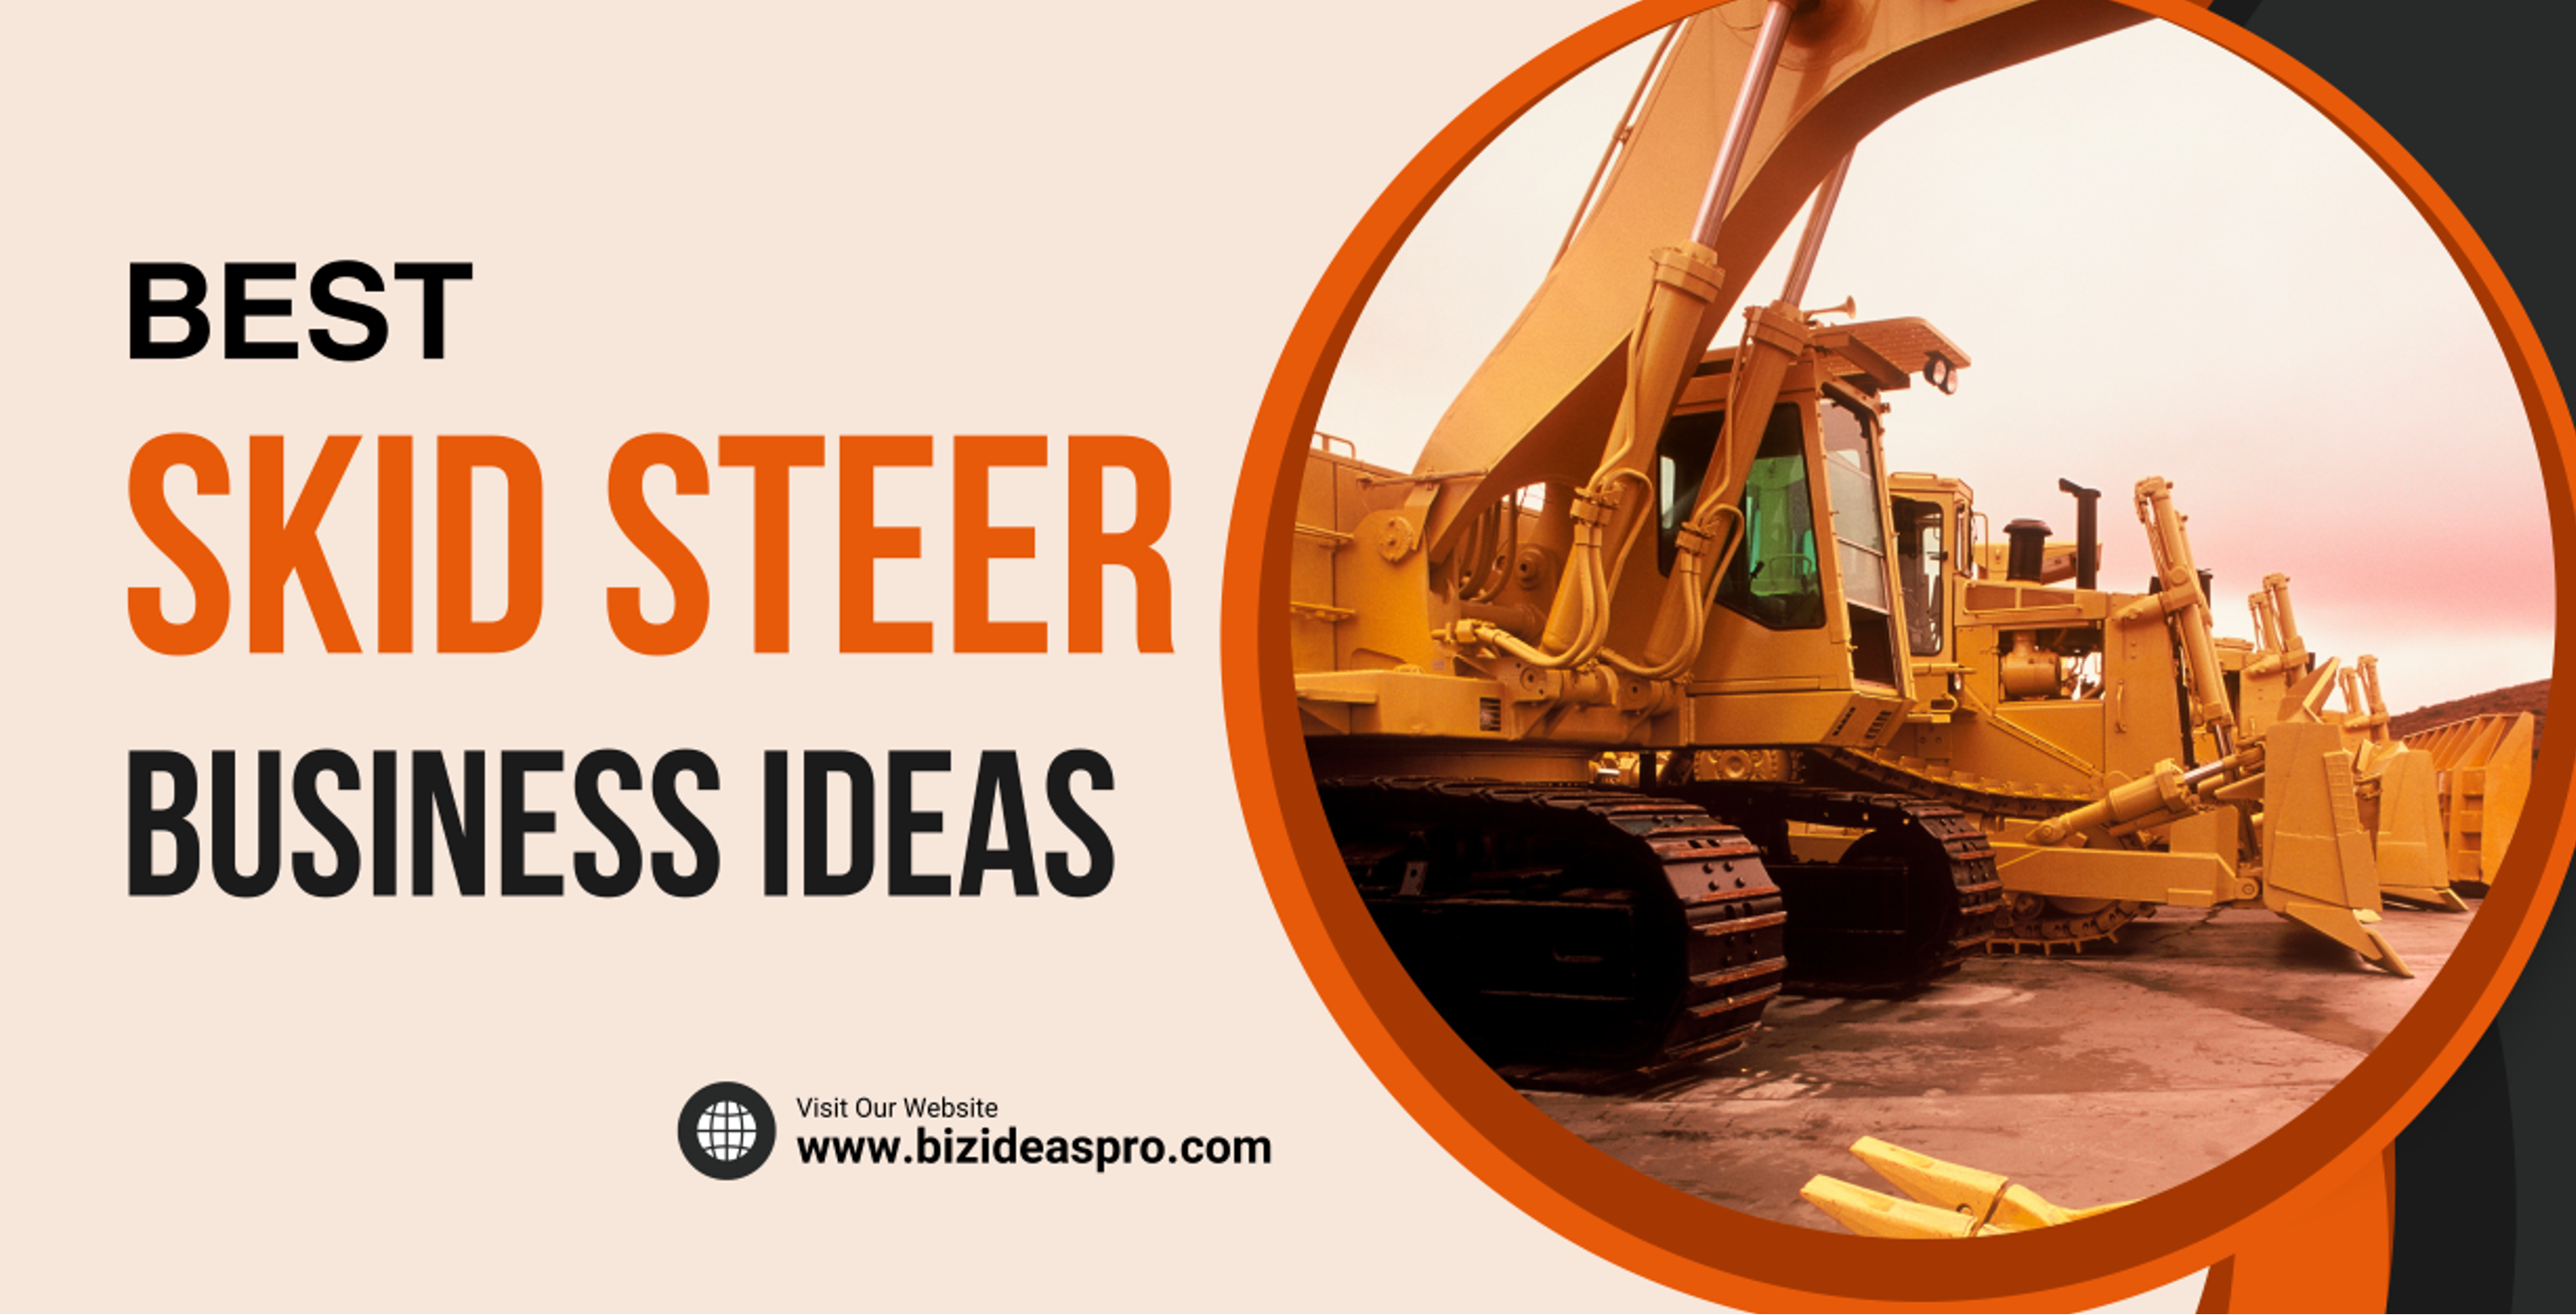 skid steer business ideas by bizideaspro.com